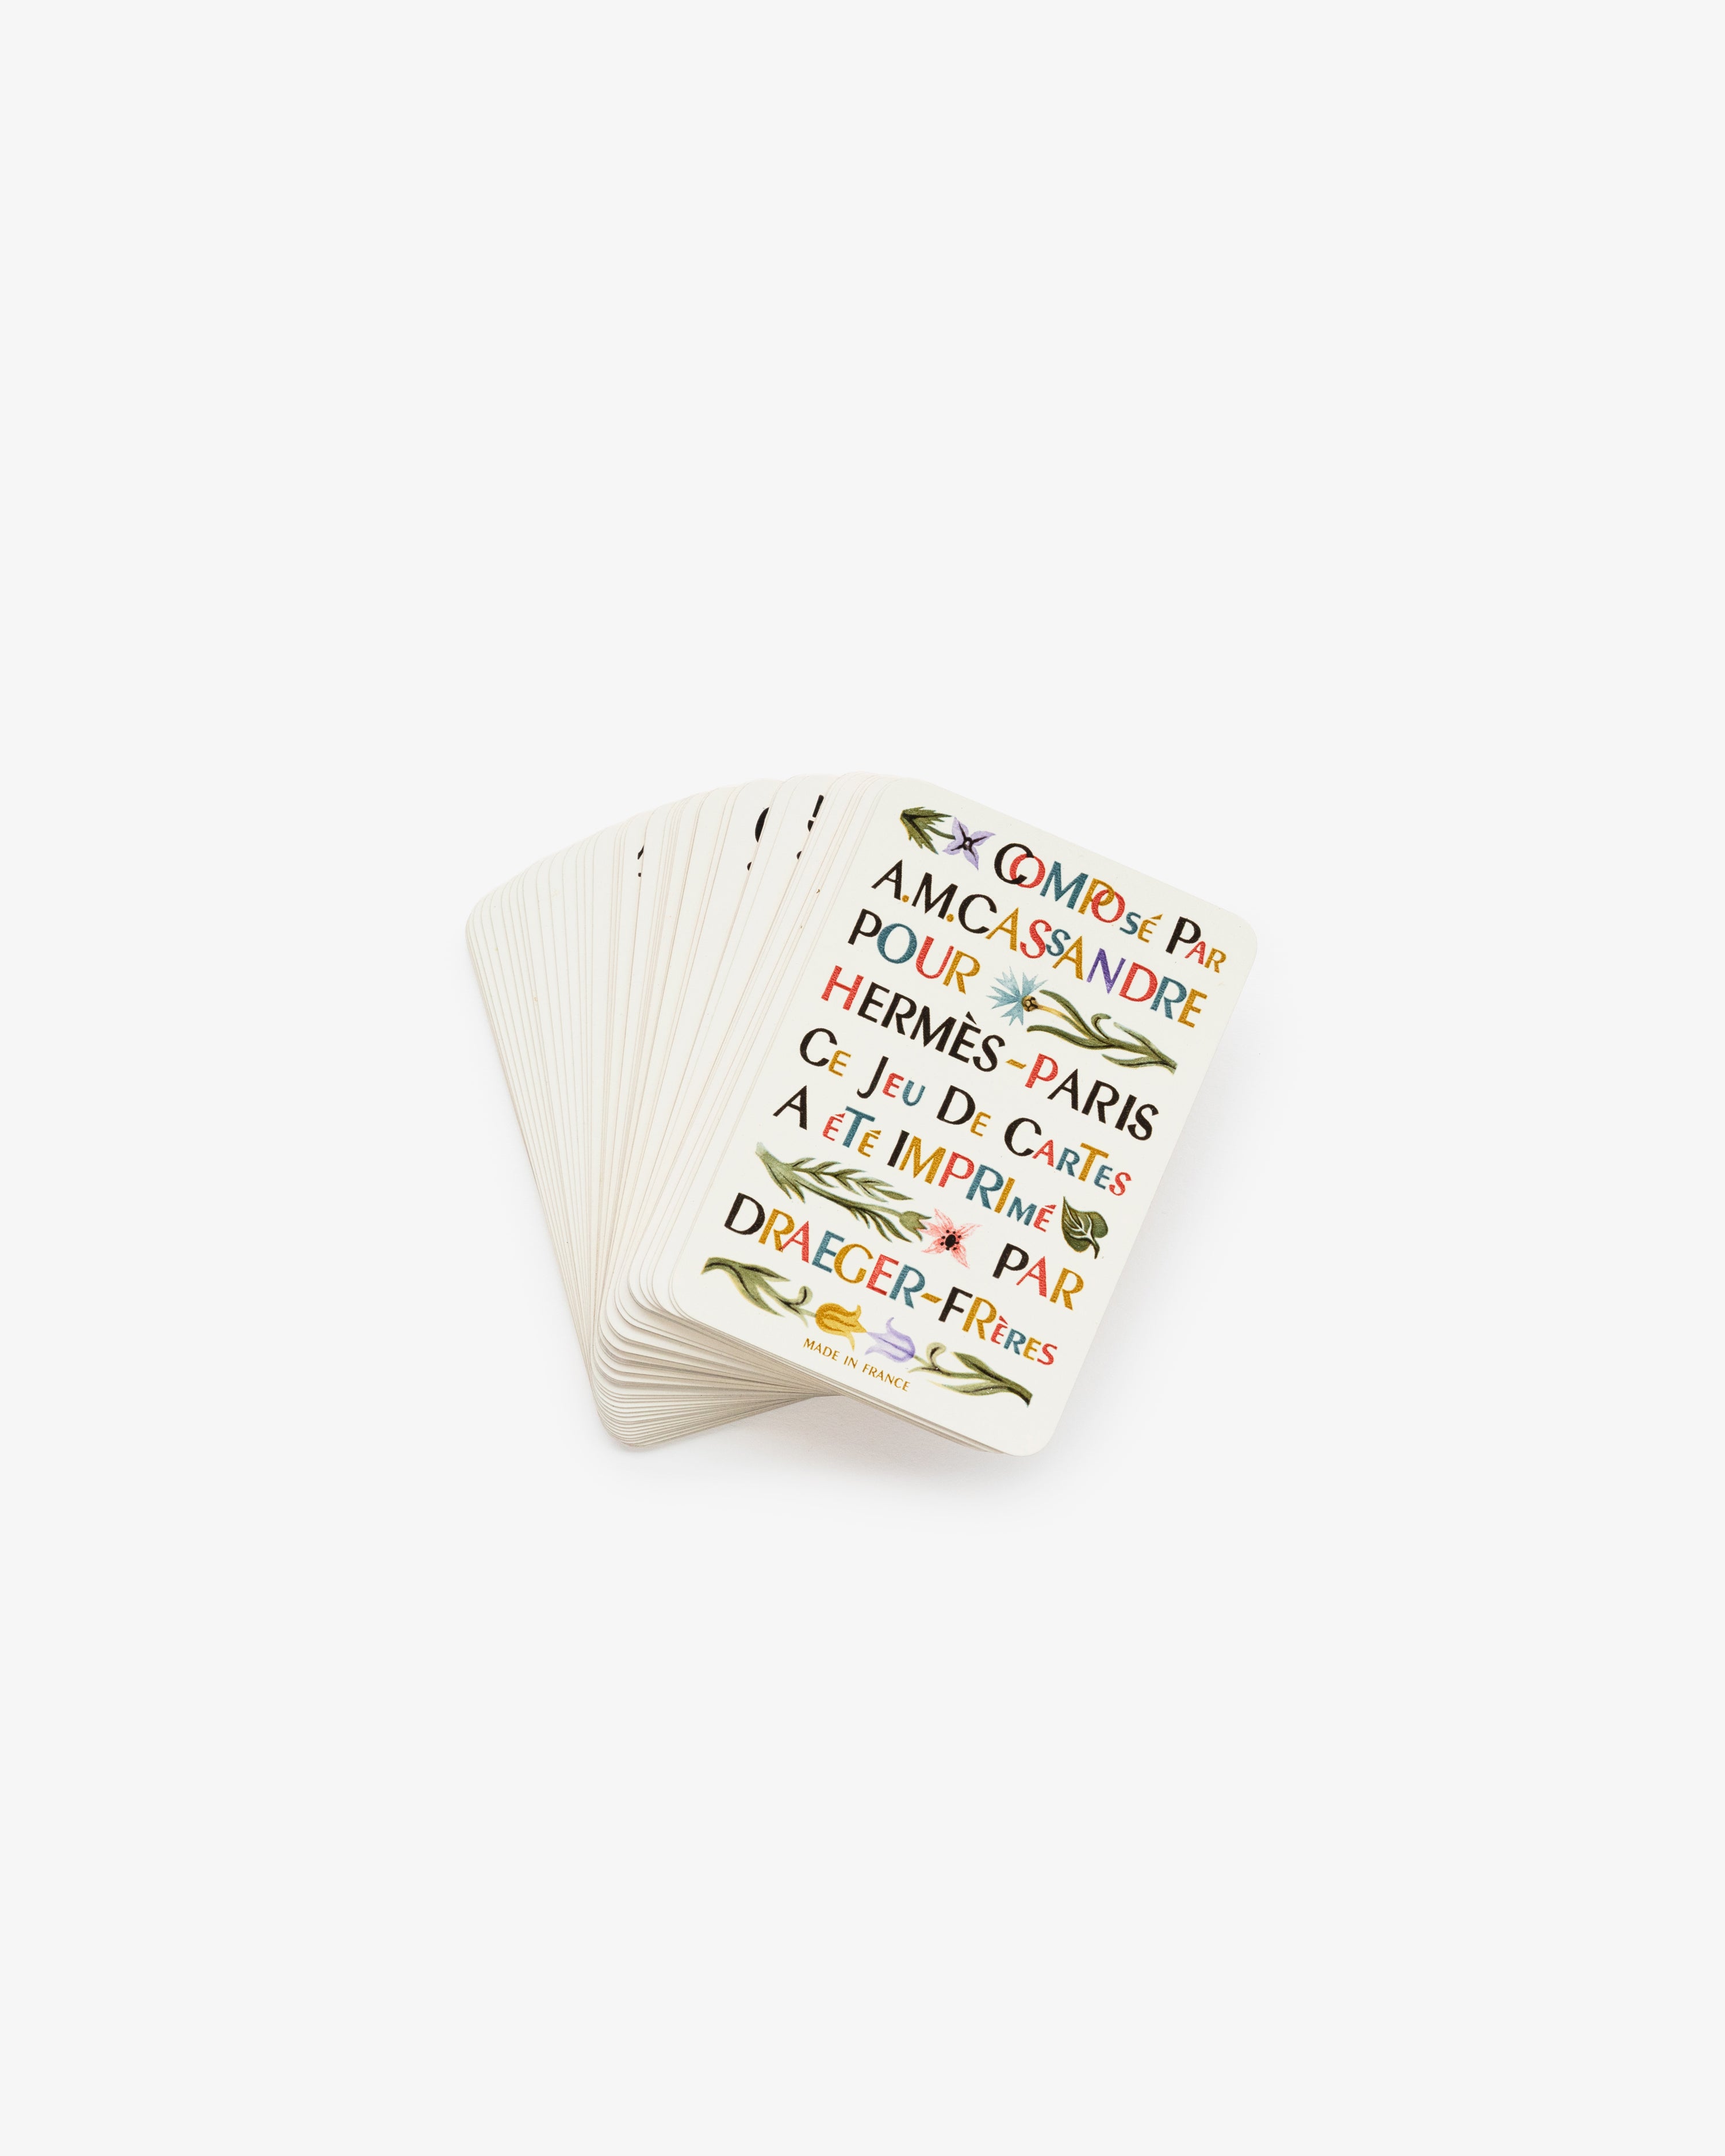 Hermès Playing Card Set